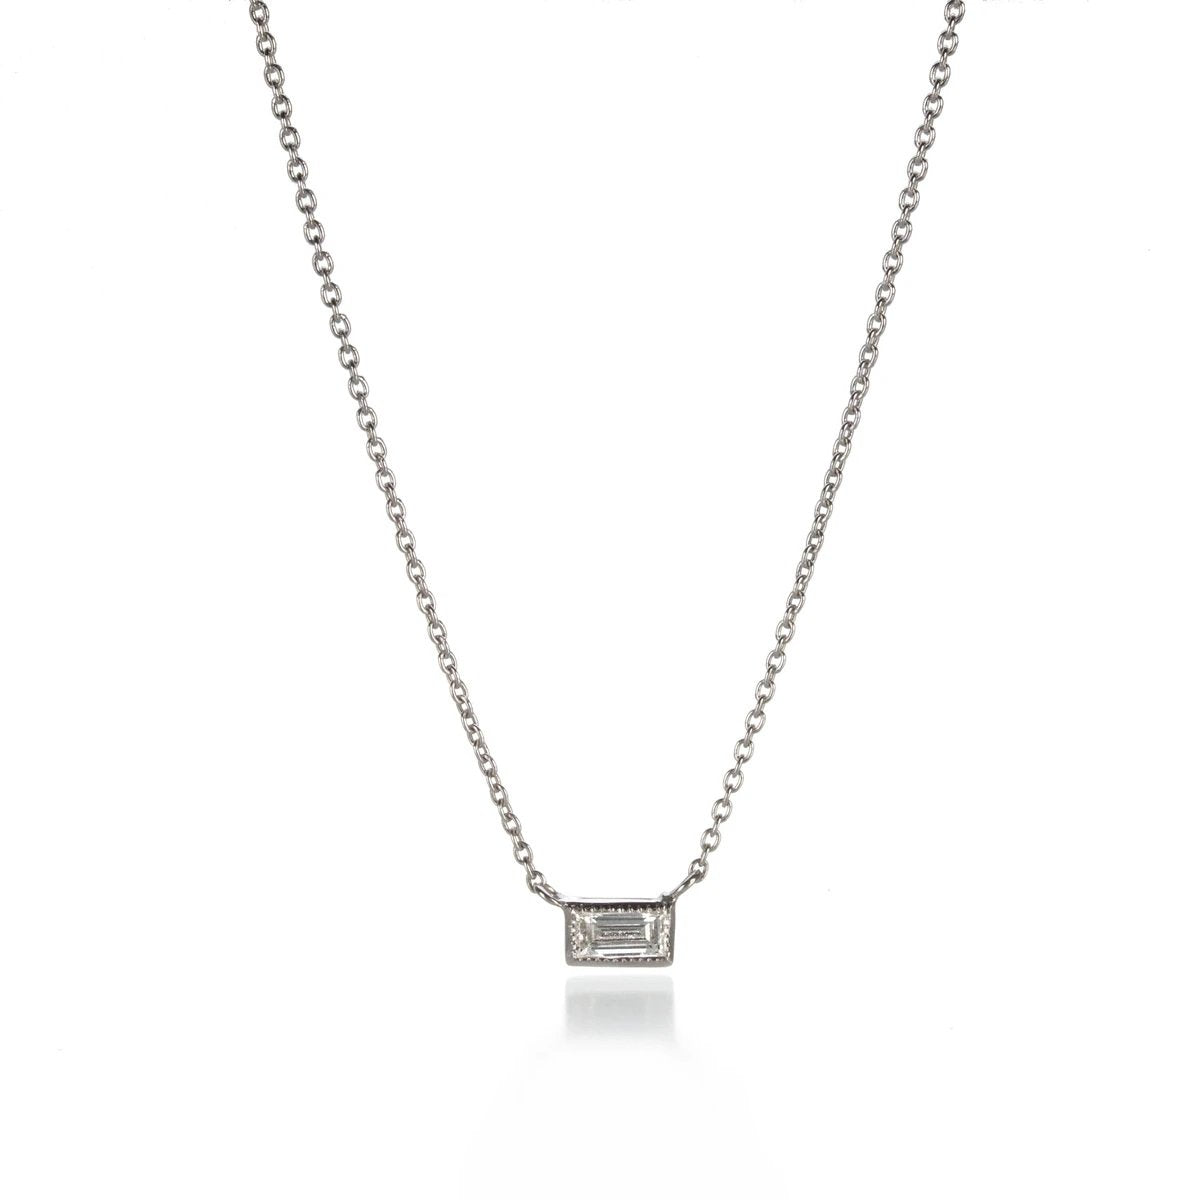 Silhouette 1 Stone White Diamond Necklace